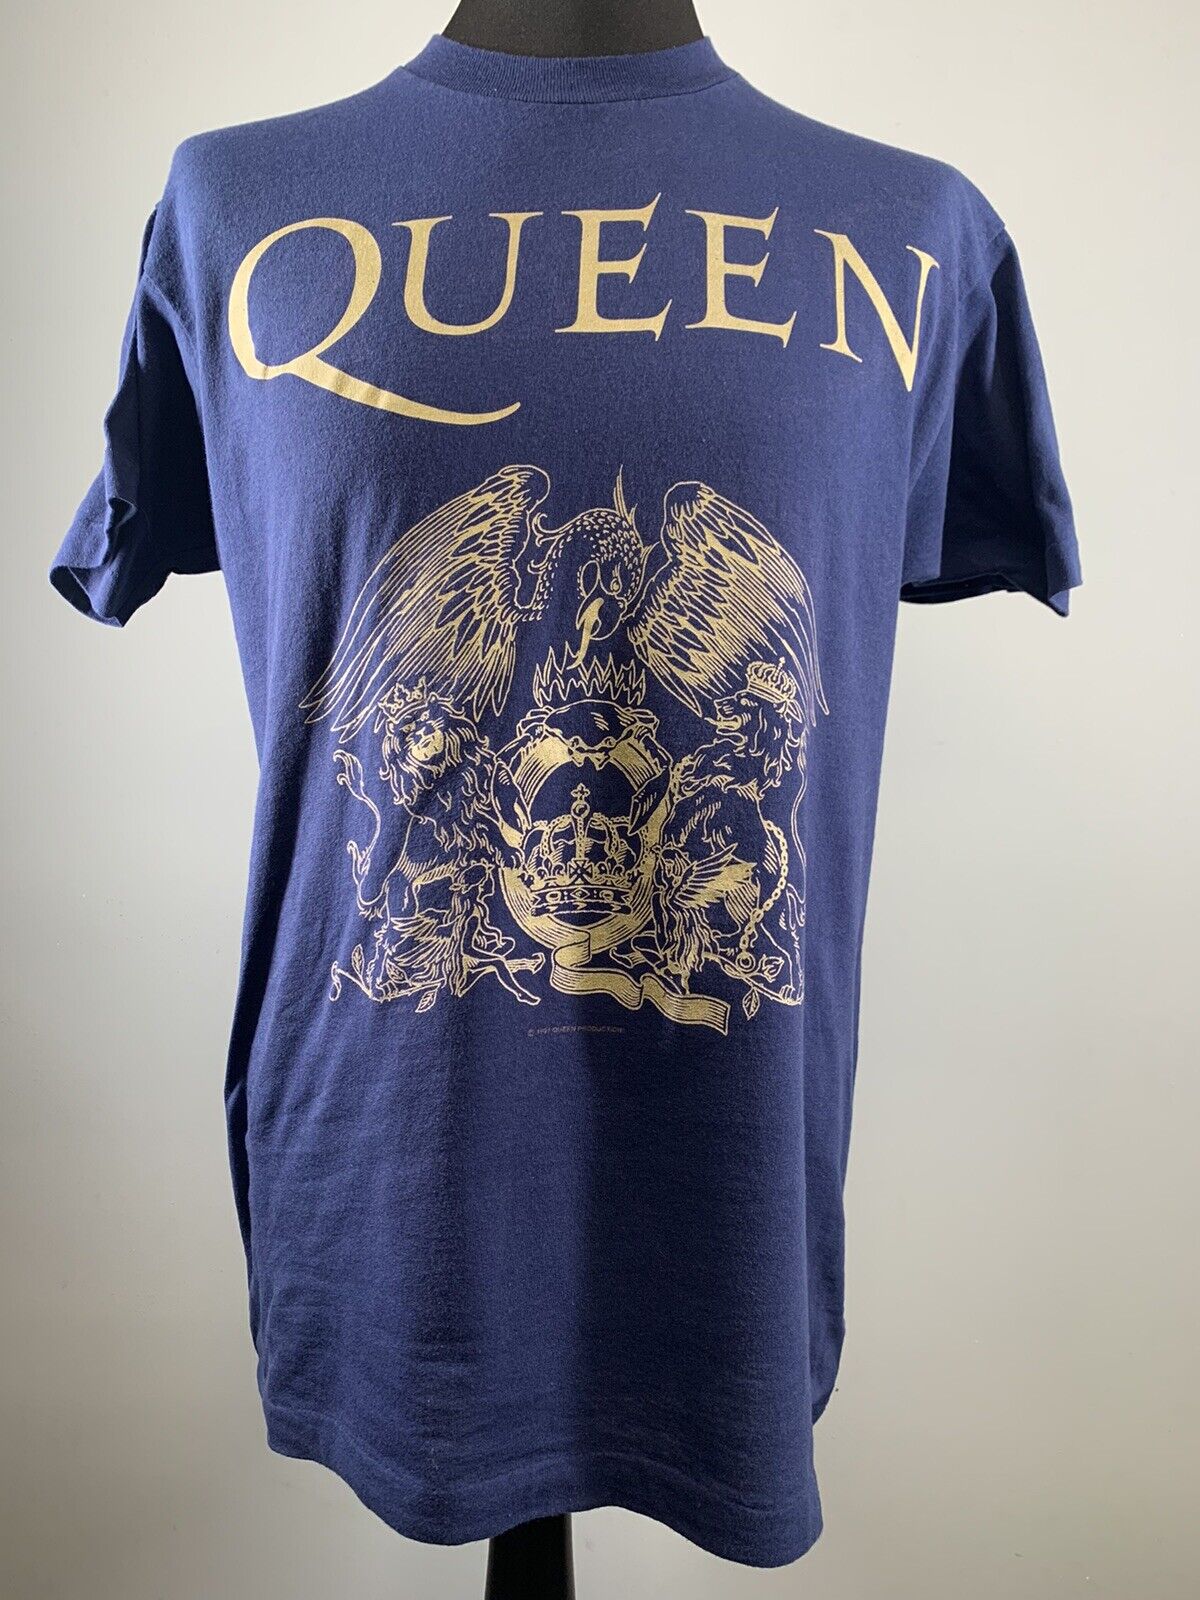 Queen Freddie Mercury Shirt Vintage Officially Licensed 1991